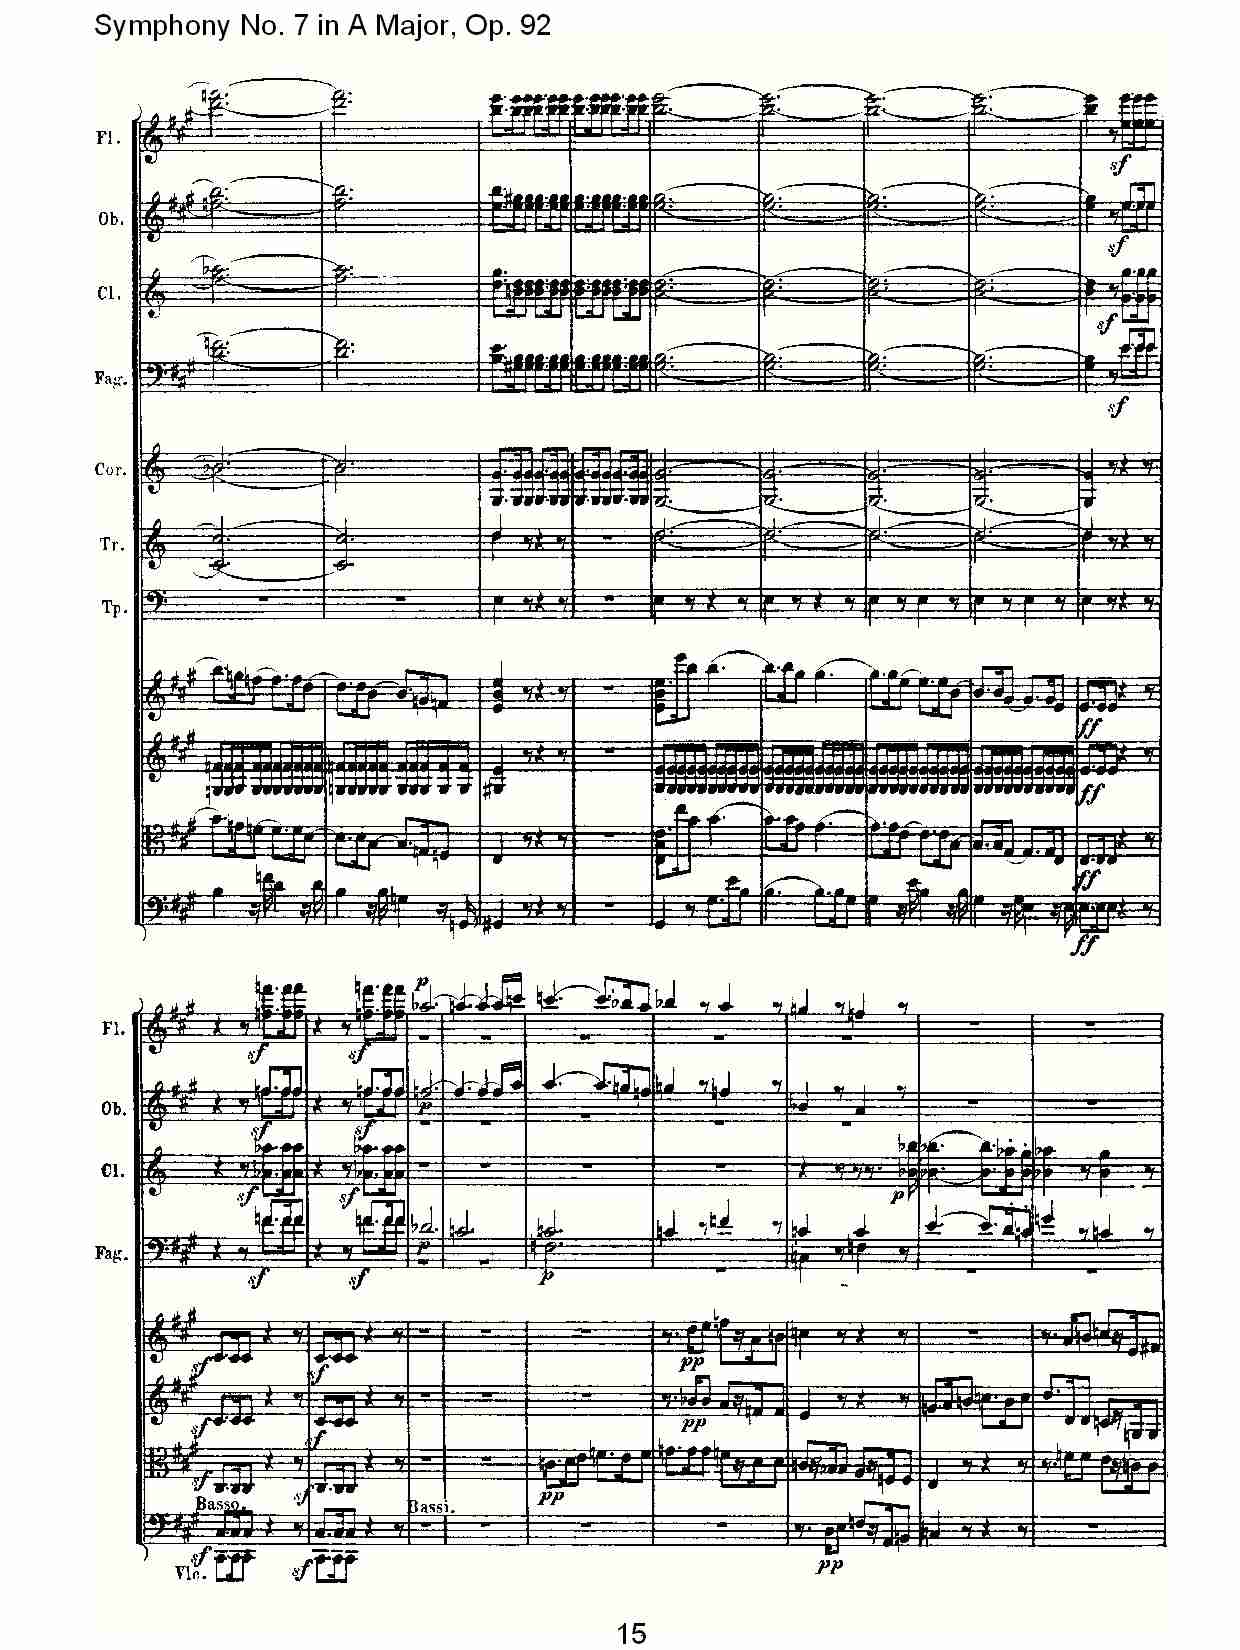 A大调第七交响曲 Op.92 第一乐章总谱（图15）